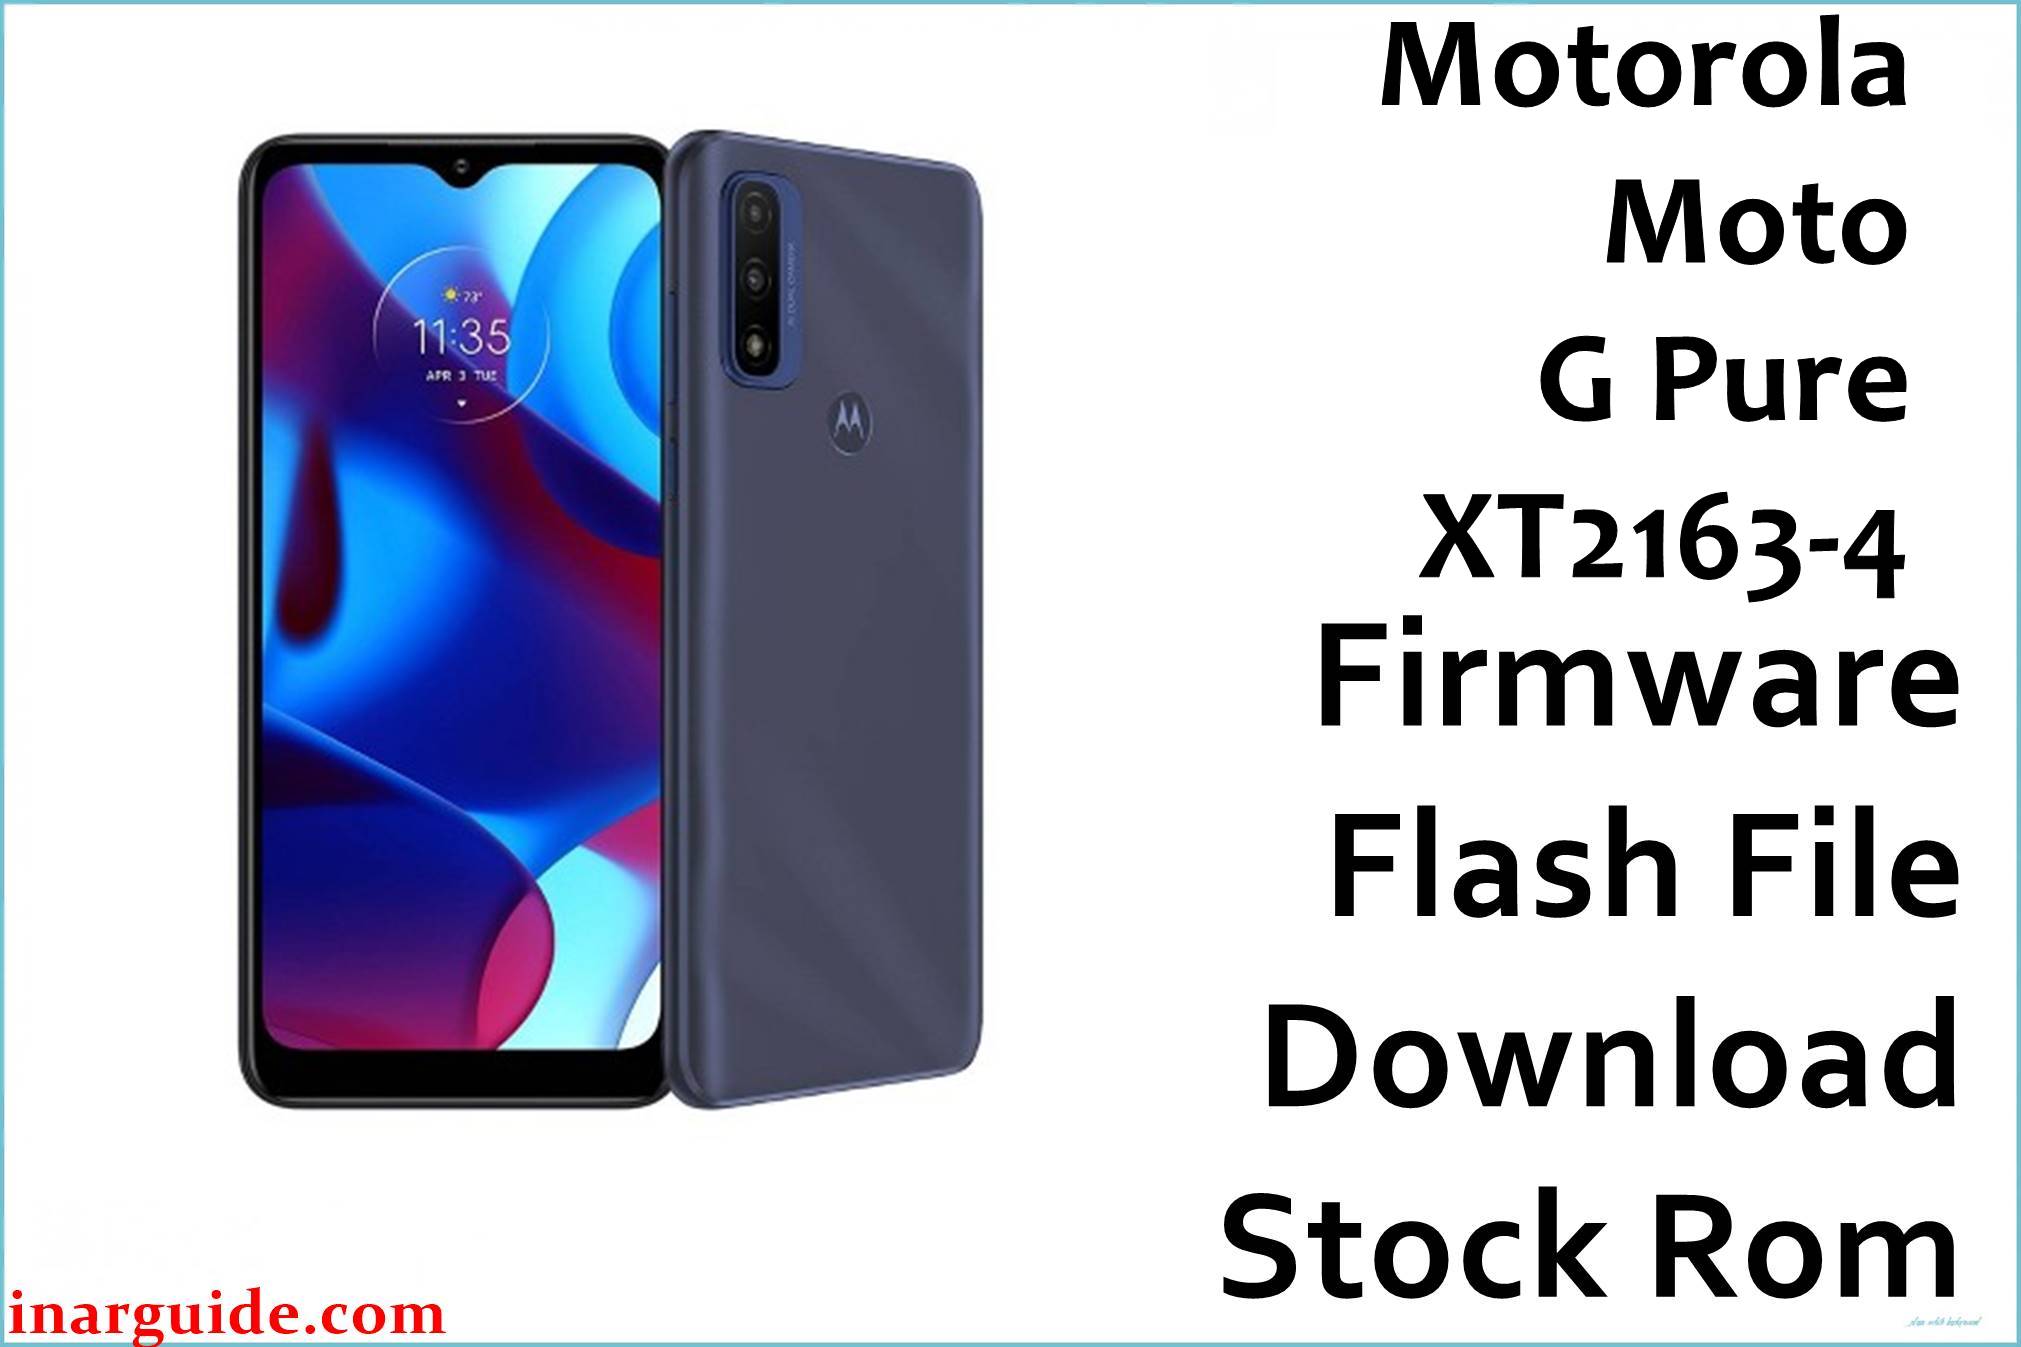 Motorola Moto G Pure XT2163-4